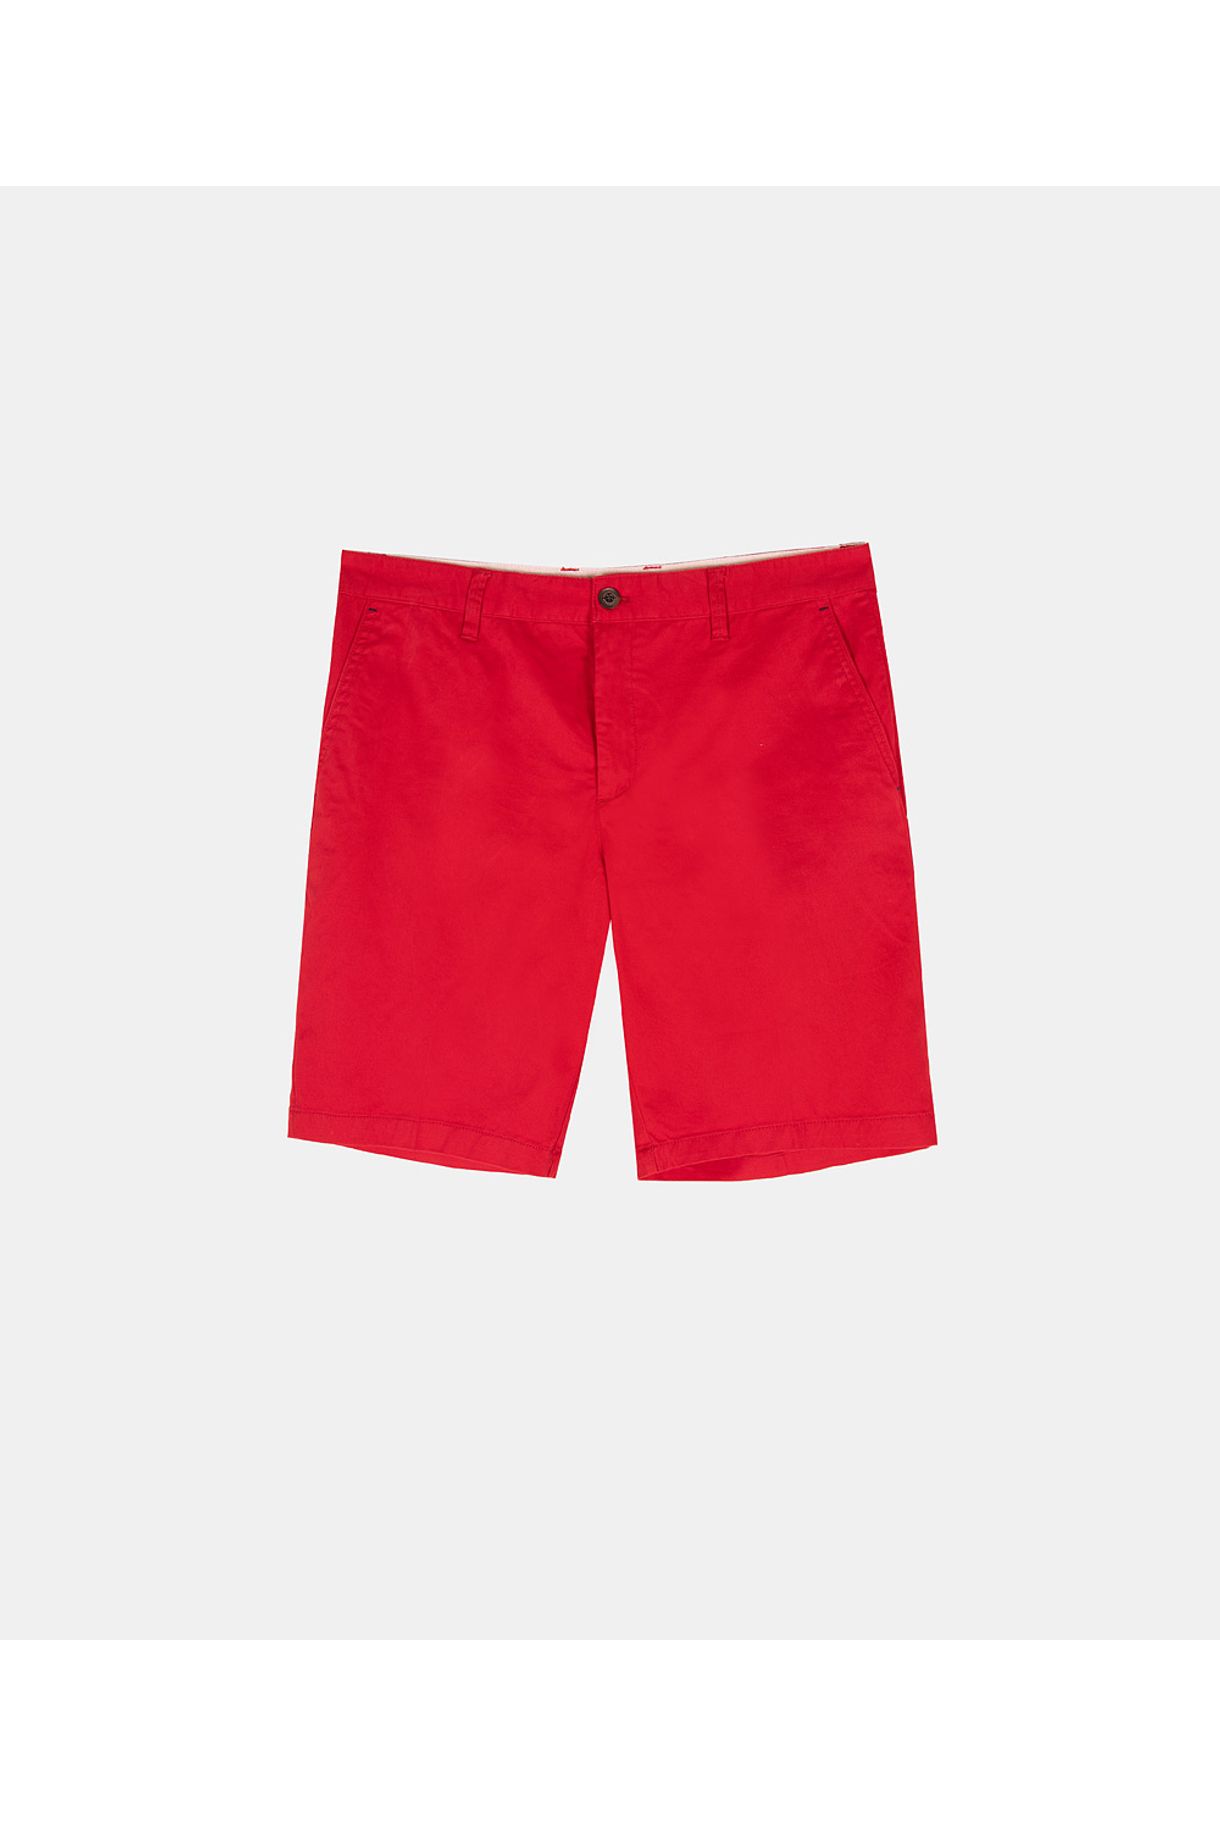 Men's Chino Shorts 98/2